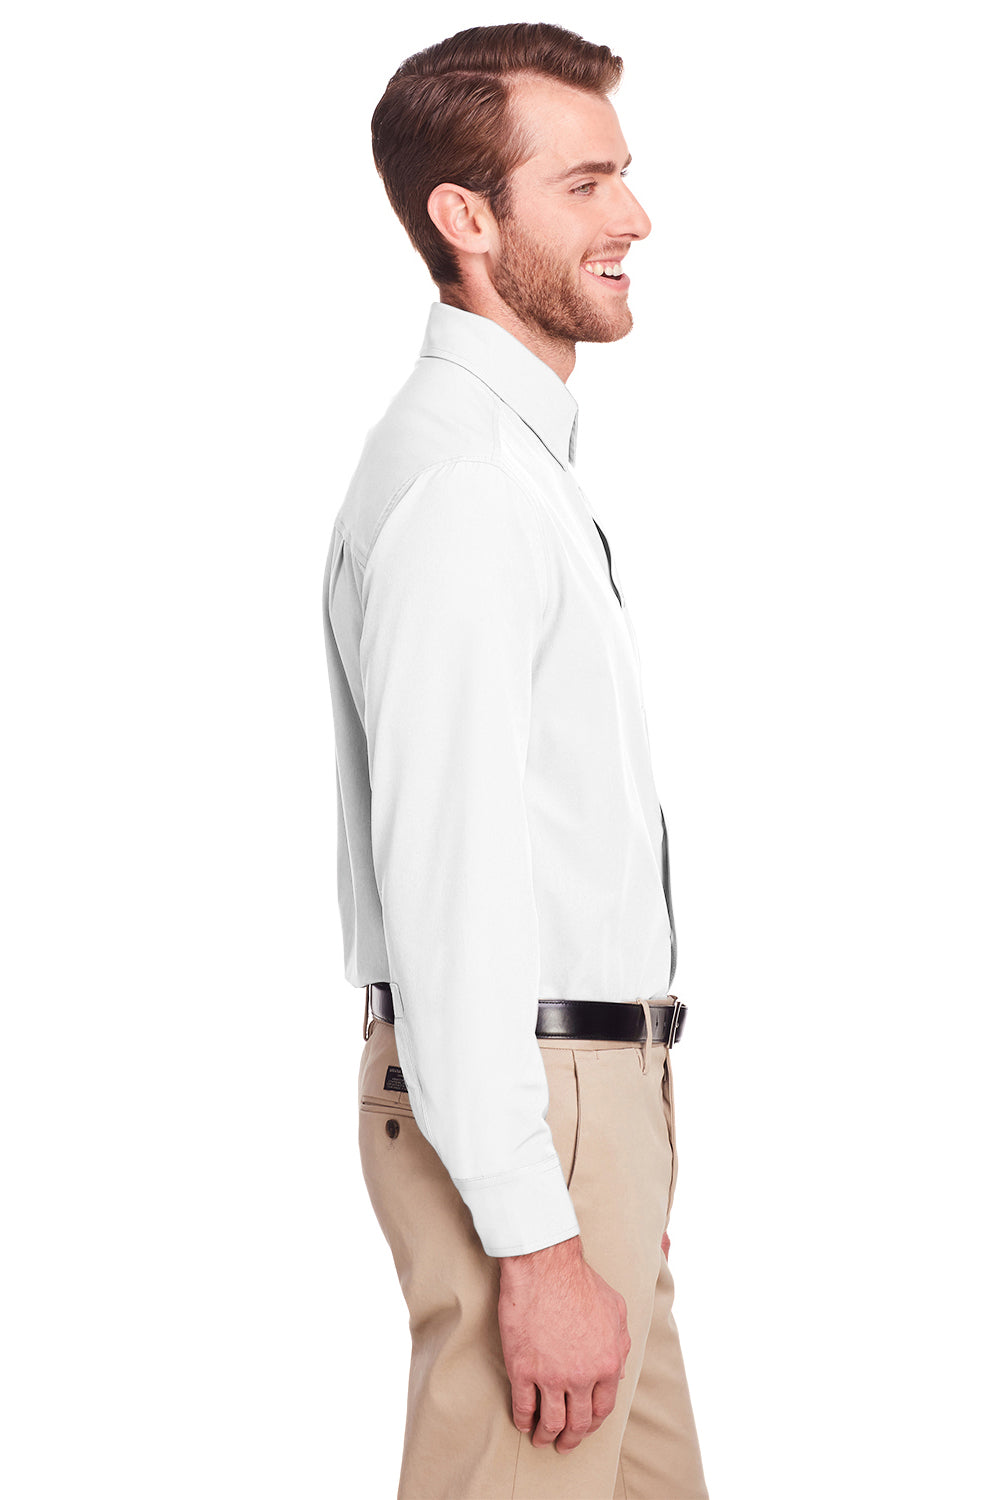 UltraClub UC500 Mens Bradley Performance Moisture Wicking Long Sleeve Button Down Shirt w/ Pocket White Side